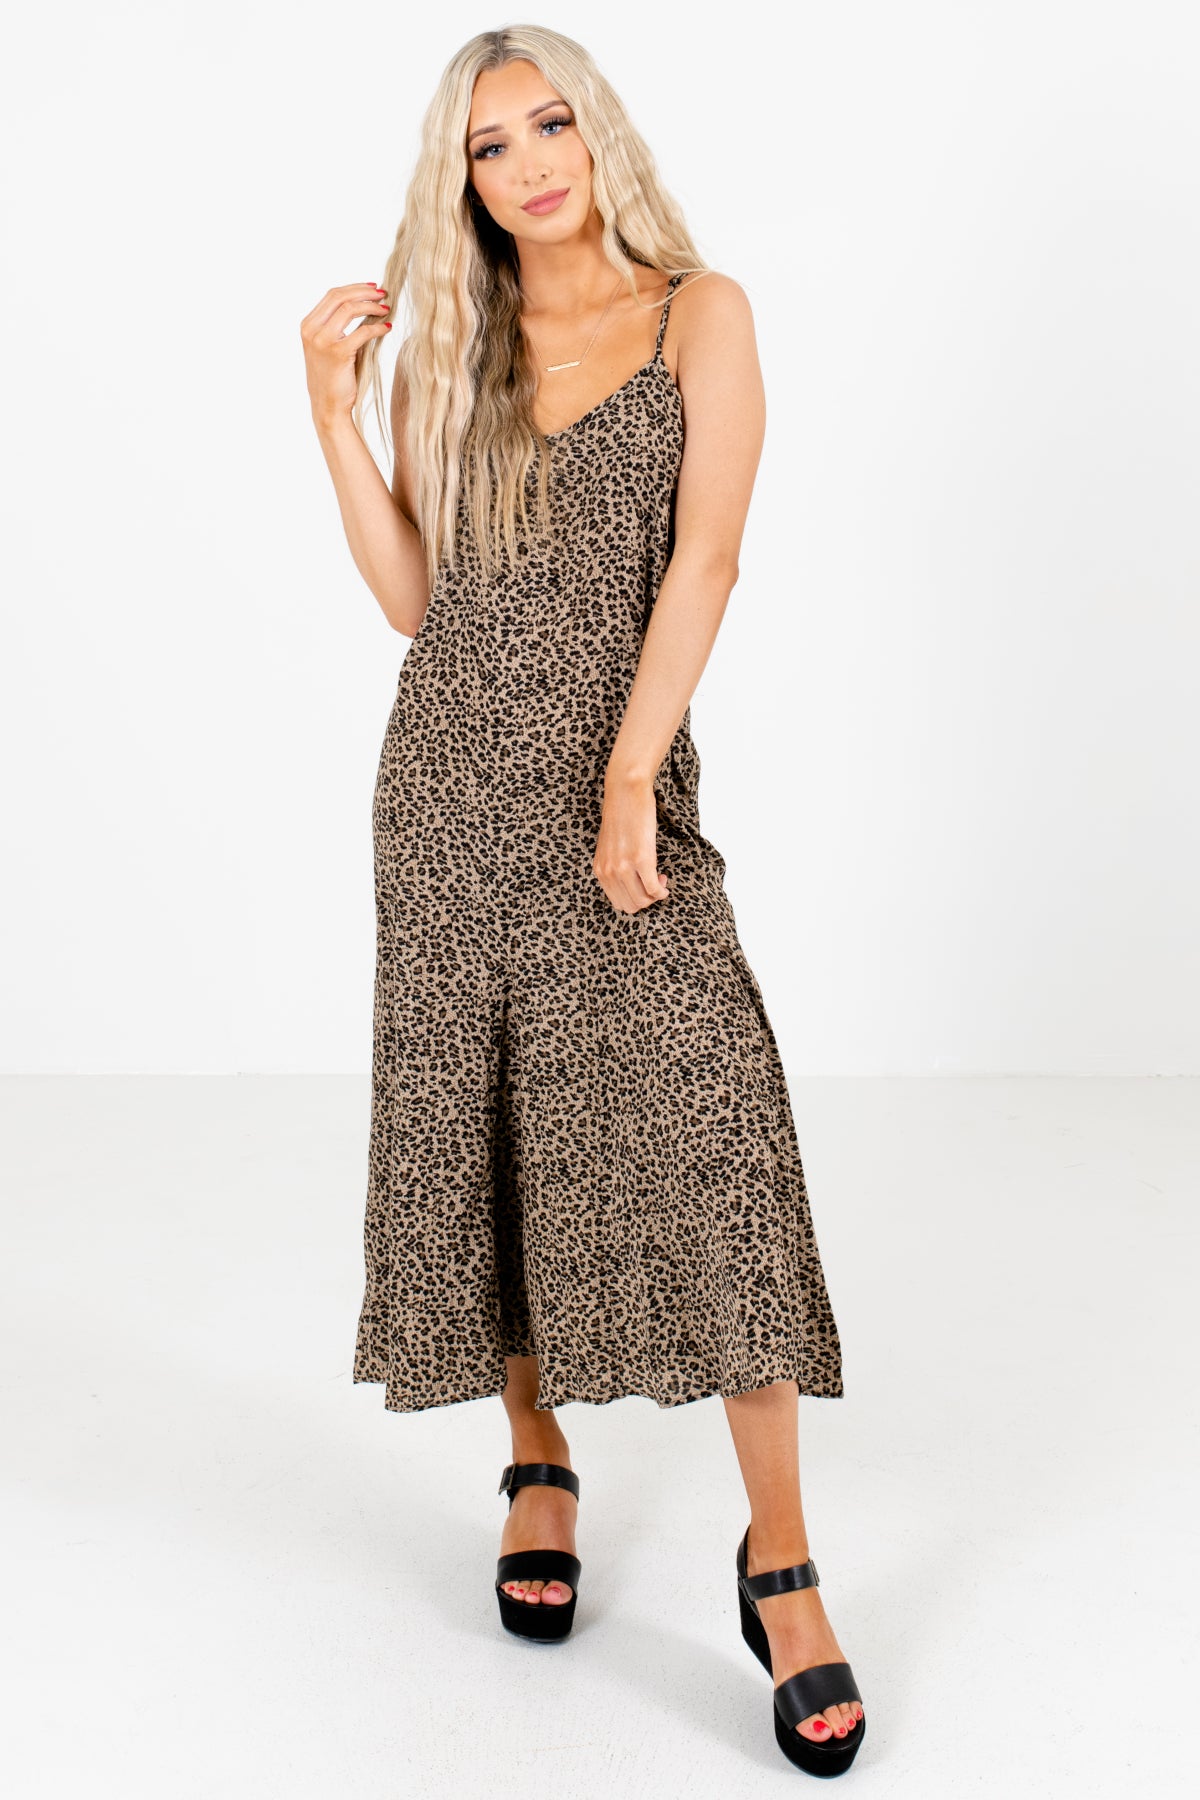 Brown Leopard Print Patterned Boutique Midi Dresses for Women